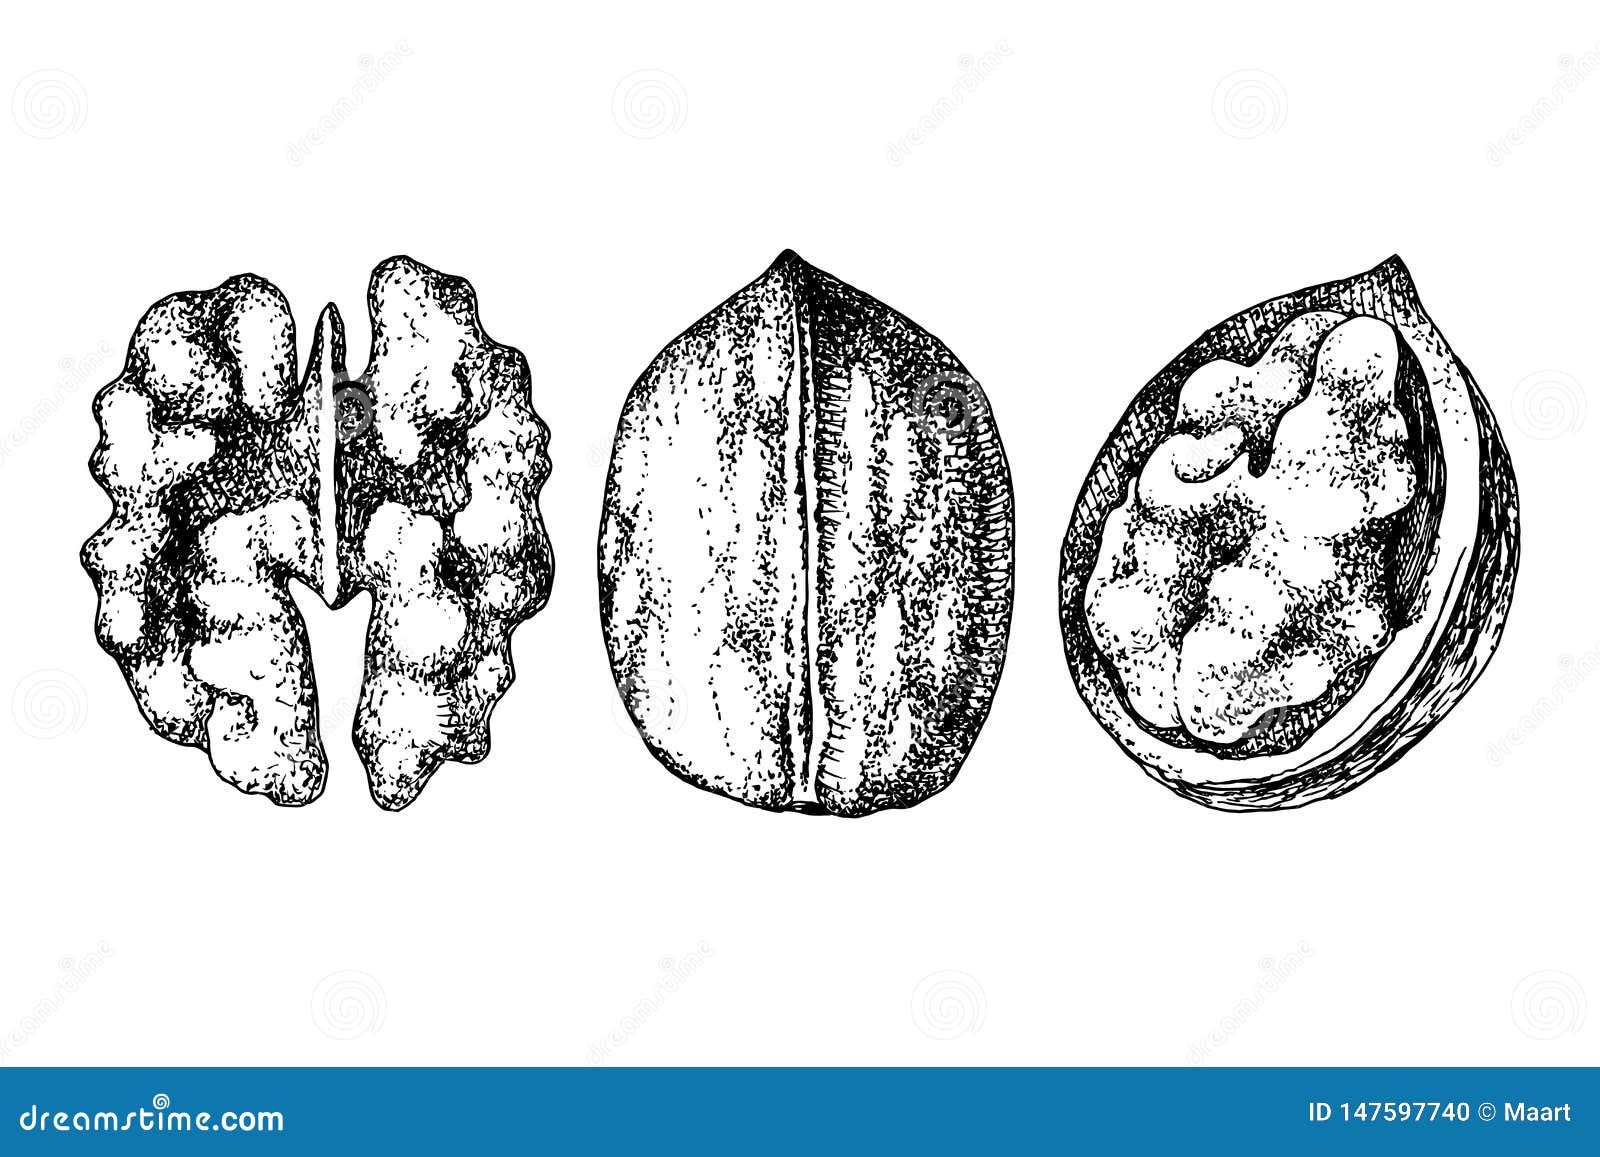 Hand drawn walnut nuts stock vector. Illustration of nutty - 147597740